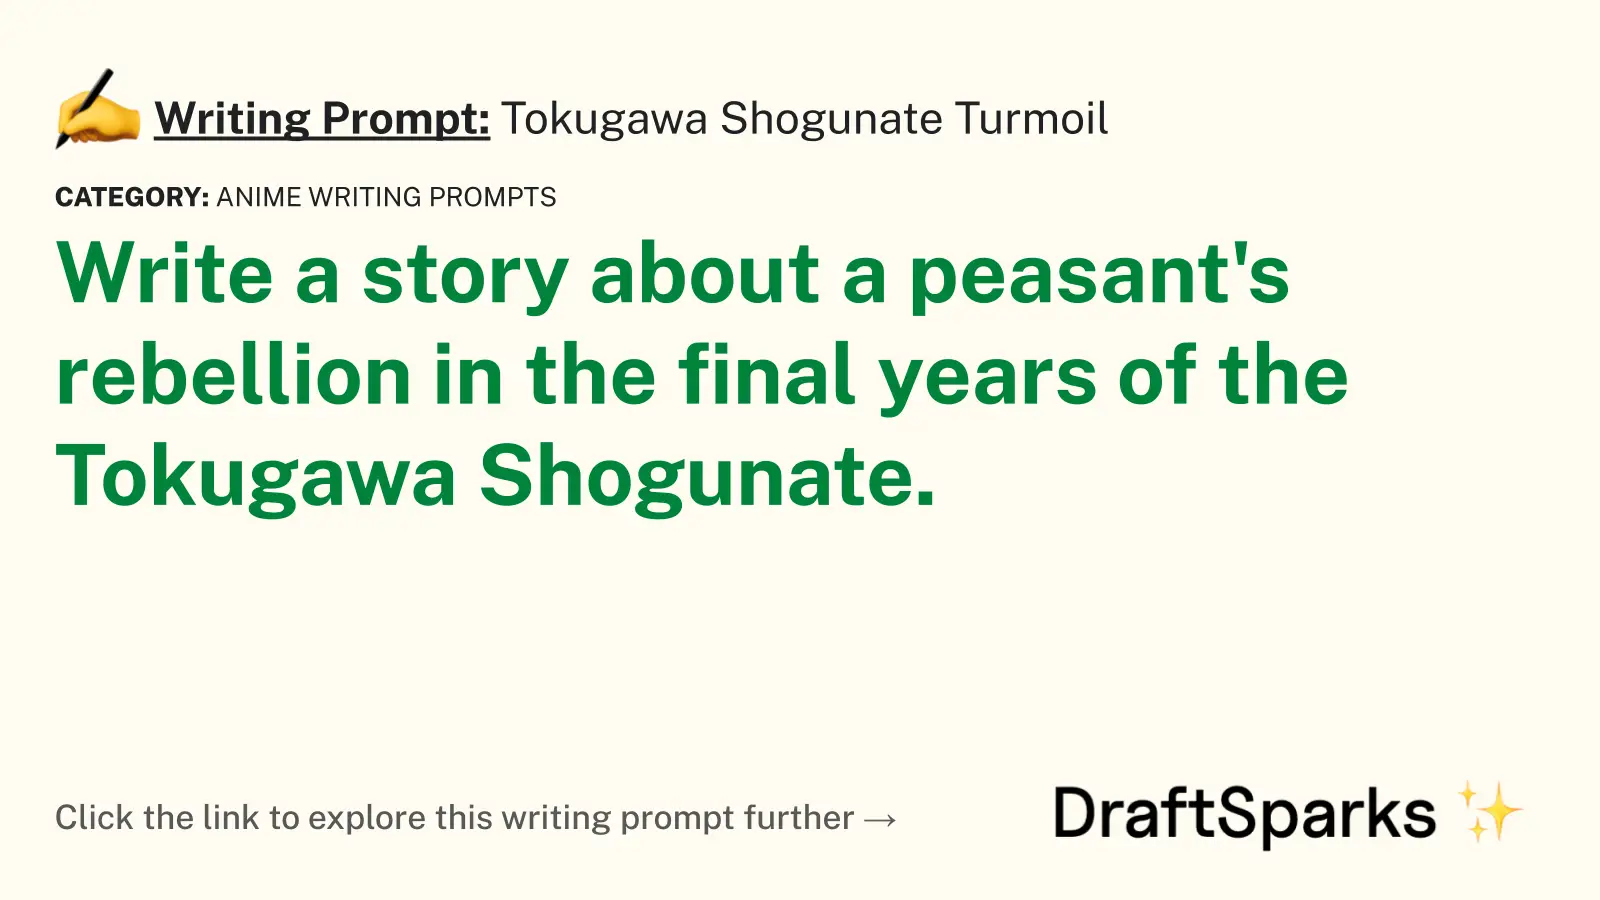 Tokugawa Shogunate Turmoil